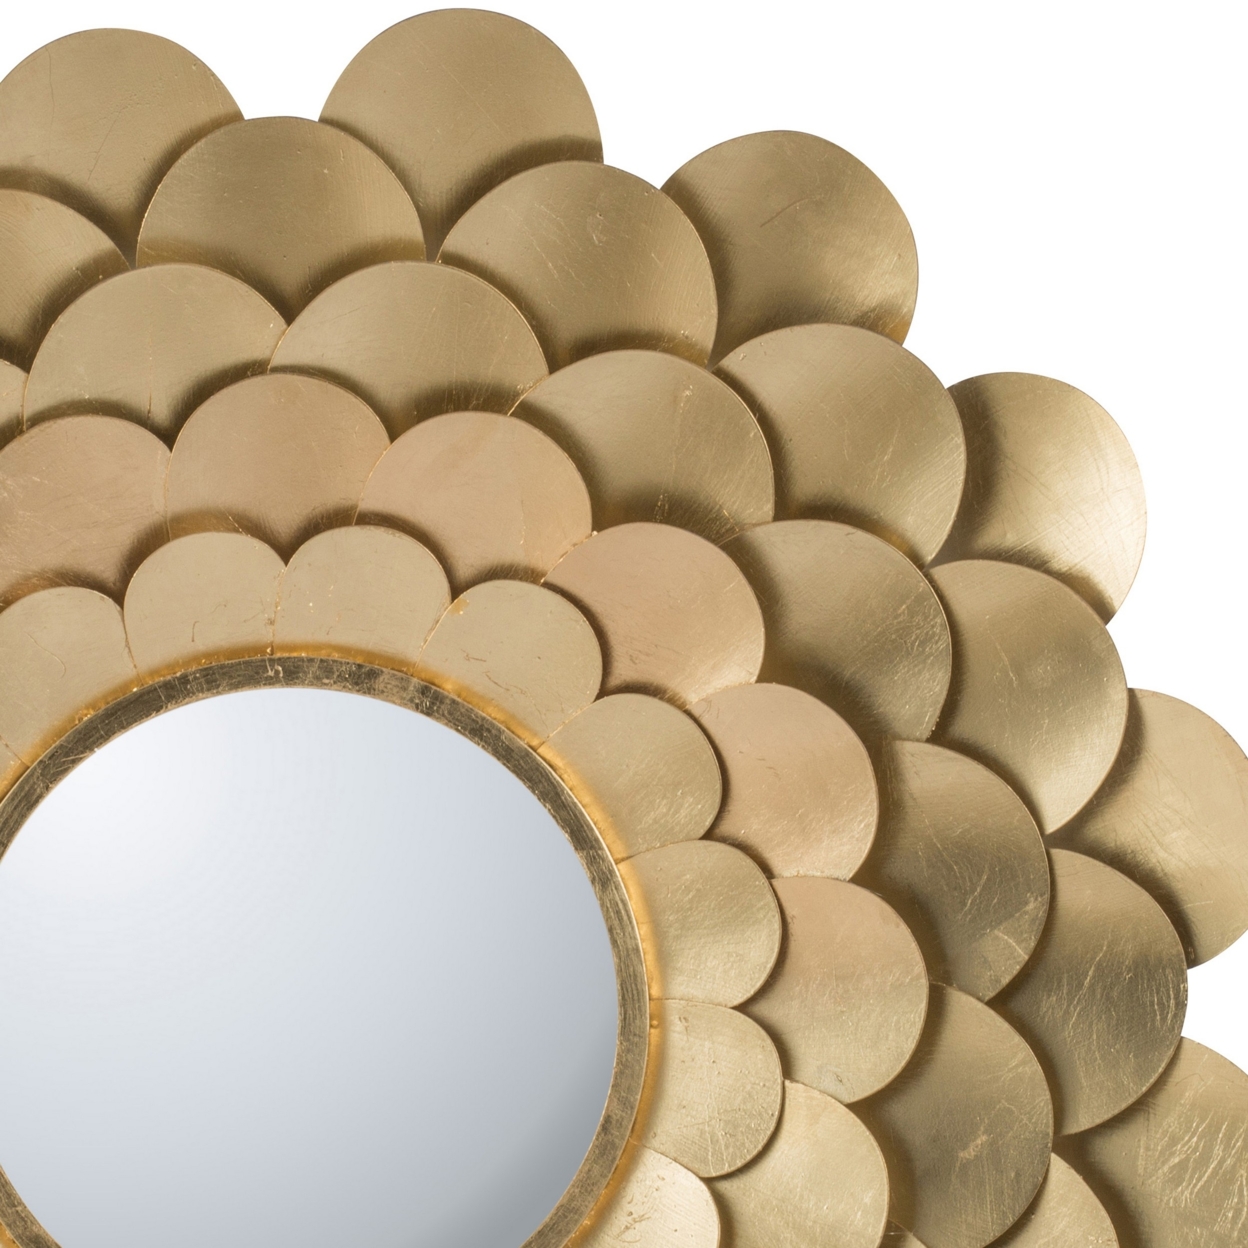 32 Inch Round Wall Mount Mirror, Blooming Flower Decor, Gold Finished Iron- Saltoro Sherpi